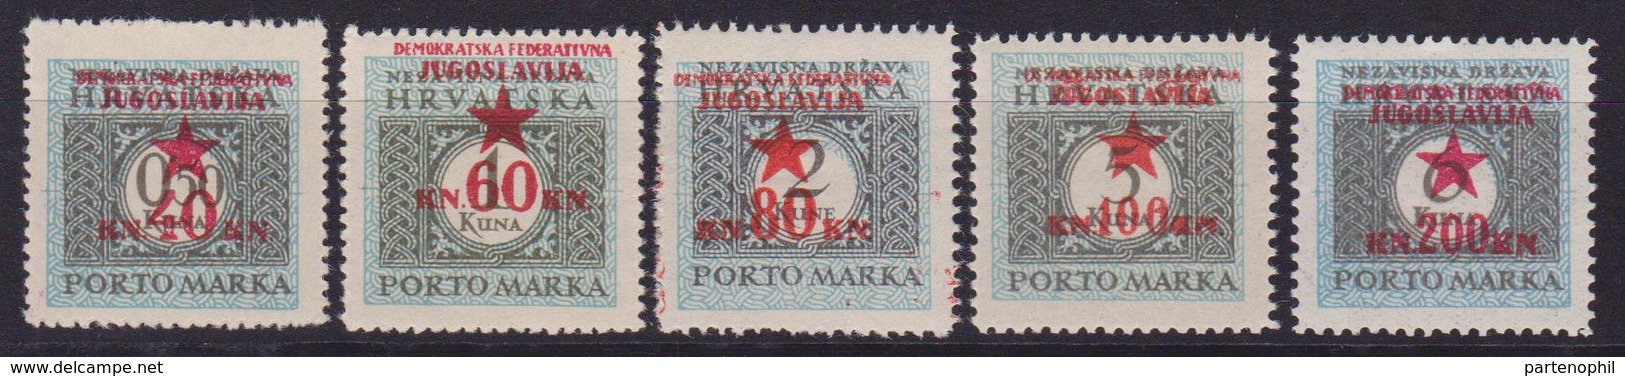 Croazia  ,Kroatien, HRVATSKA Overprint Jugoslavia 1945 - Segnatasse MNH - Croatia